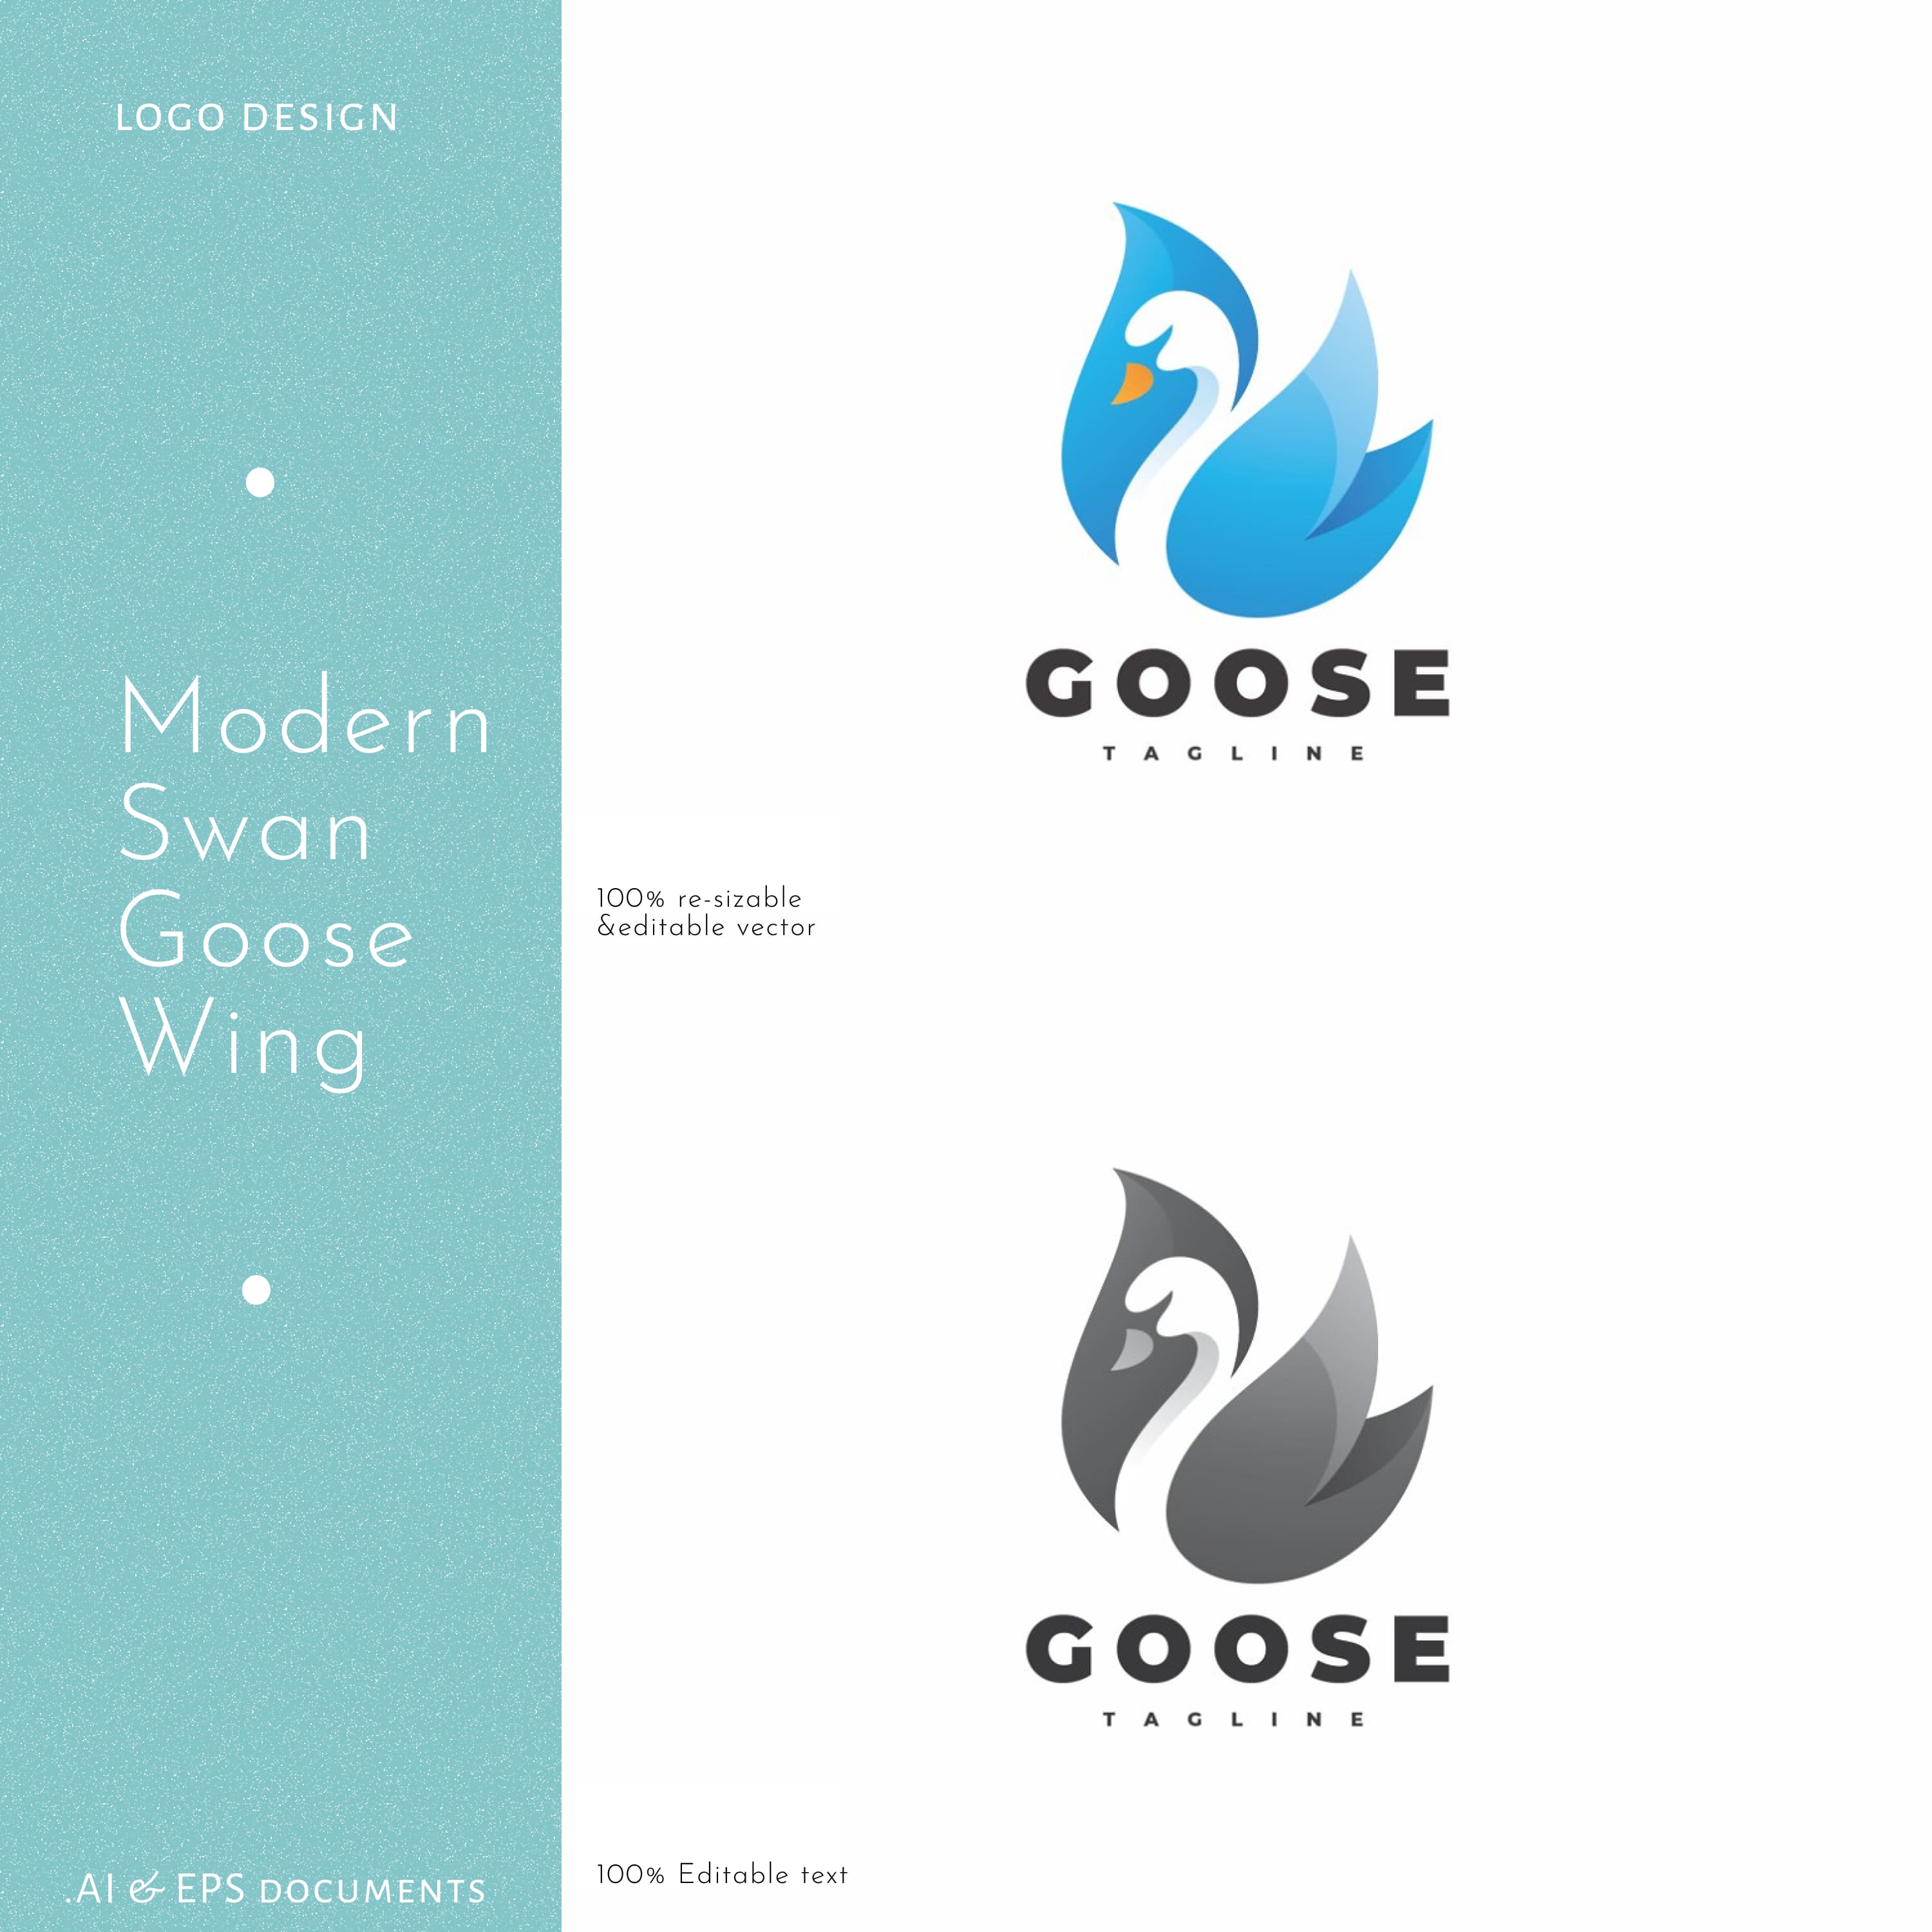 Modern Swan Goose Wing Logo Design cover.